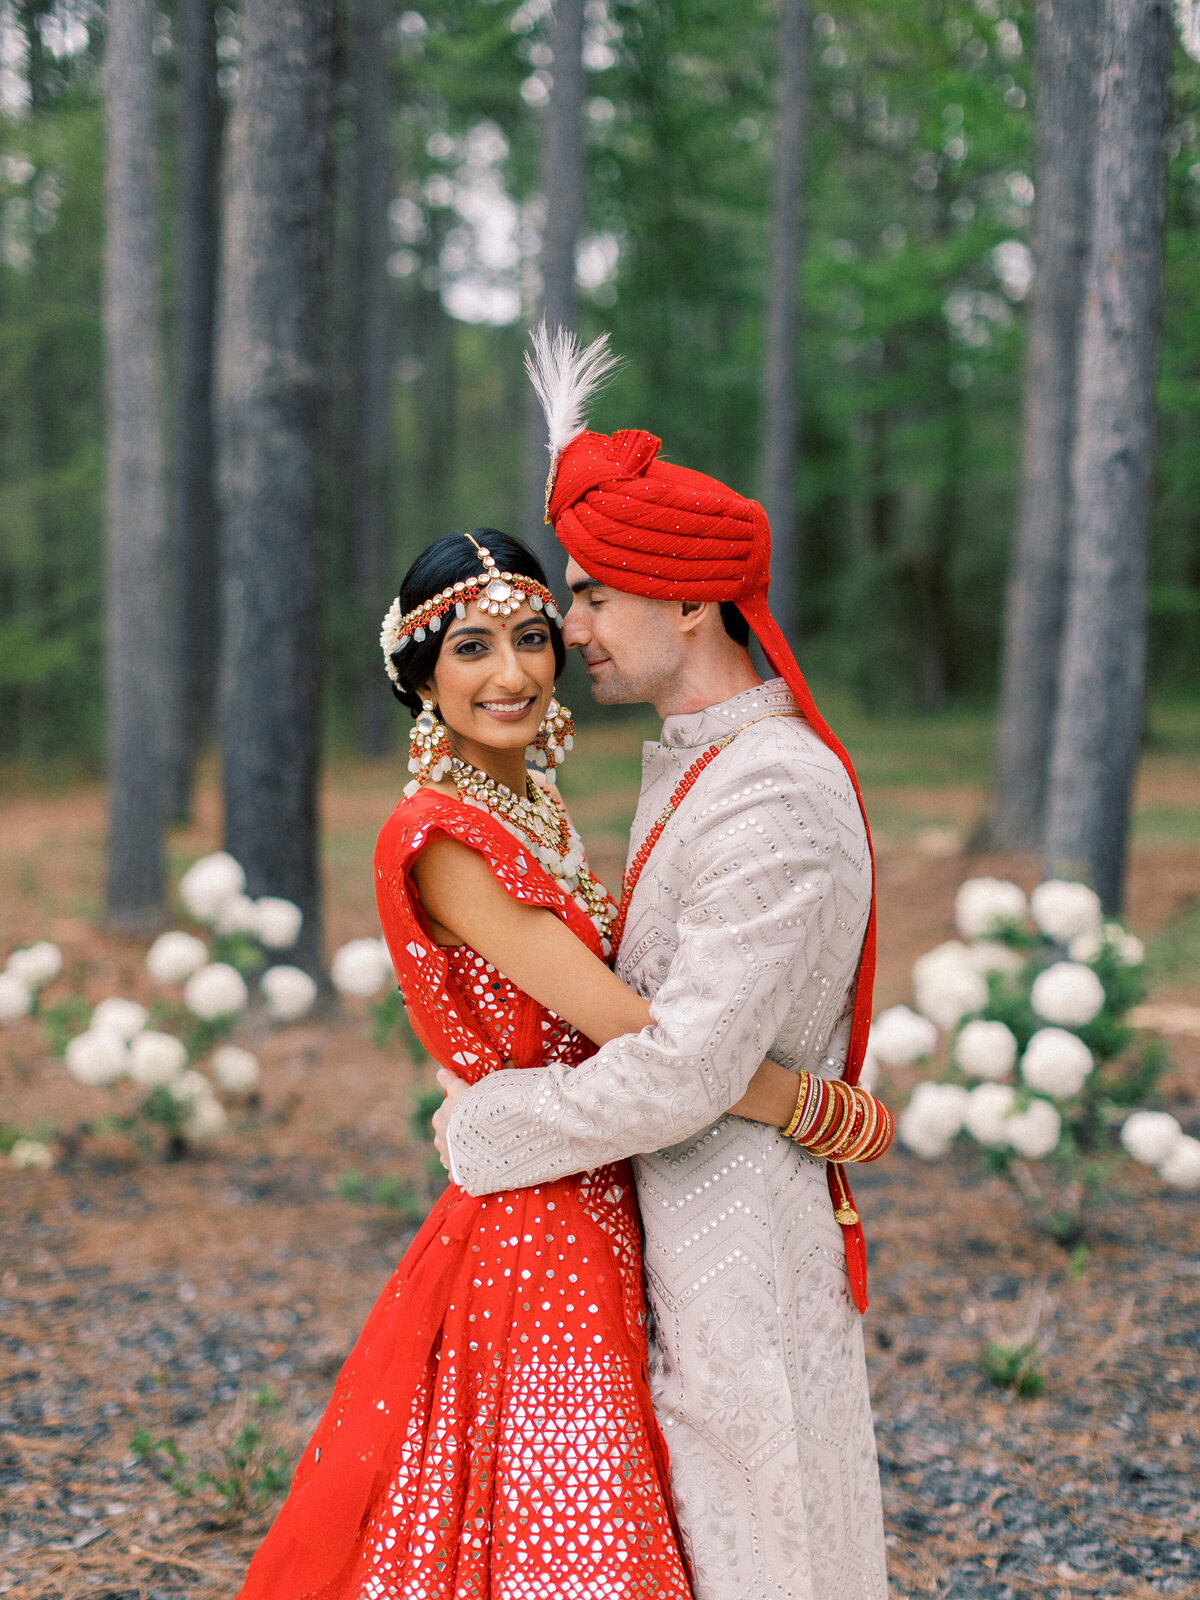 Prianka + Alex - Hindu Wedding 13 - Portraits - Bride and Groom